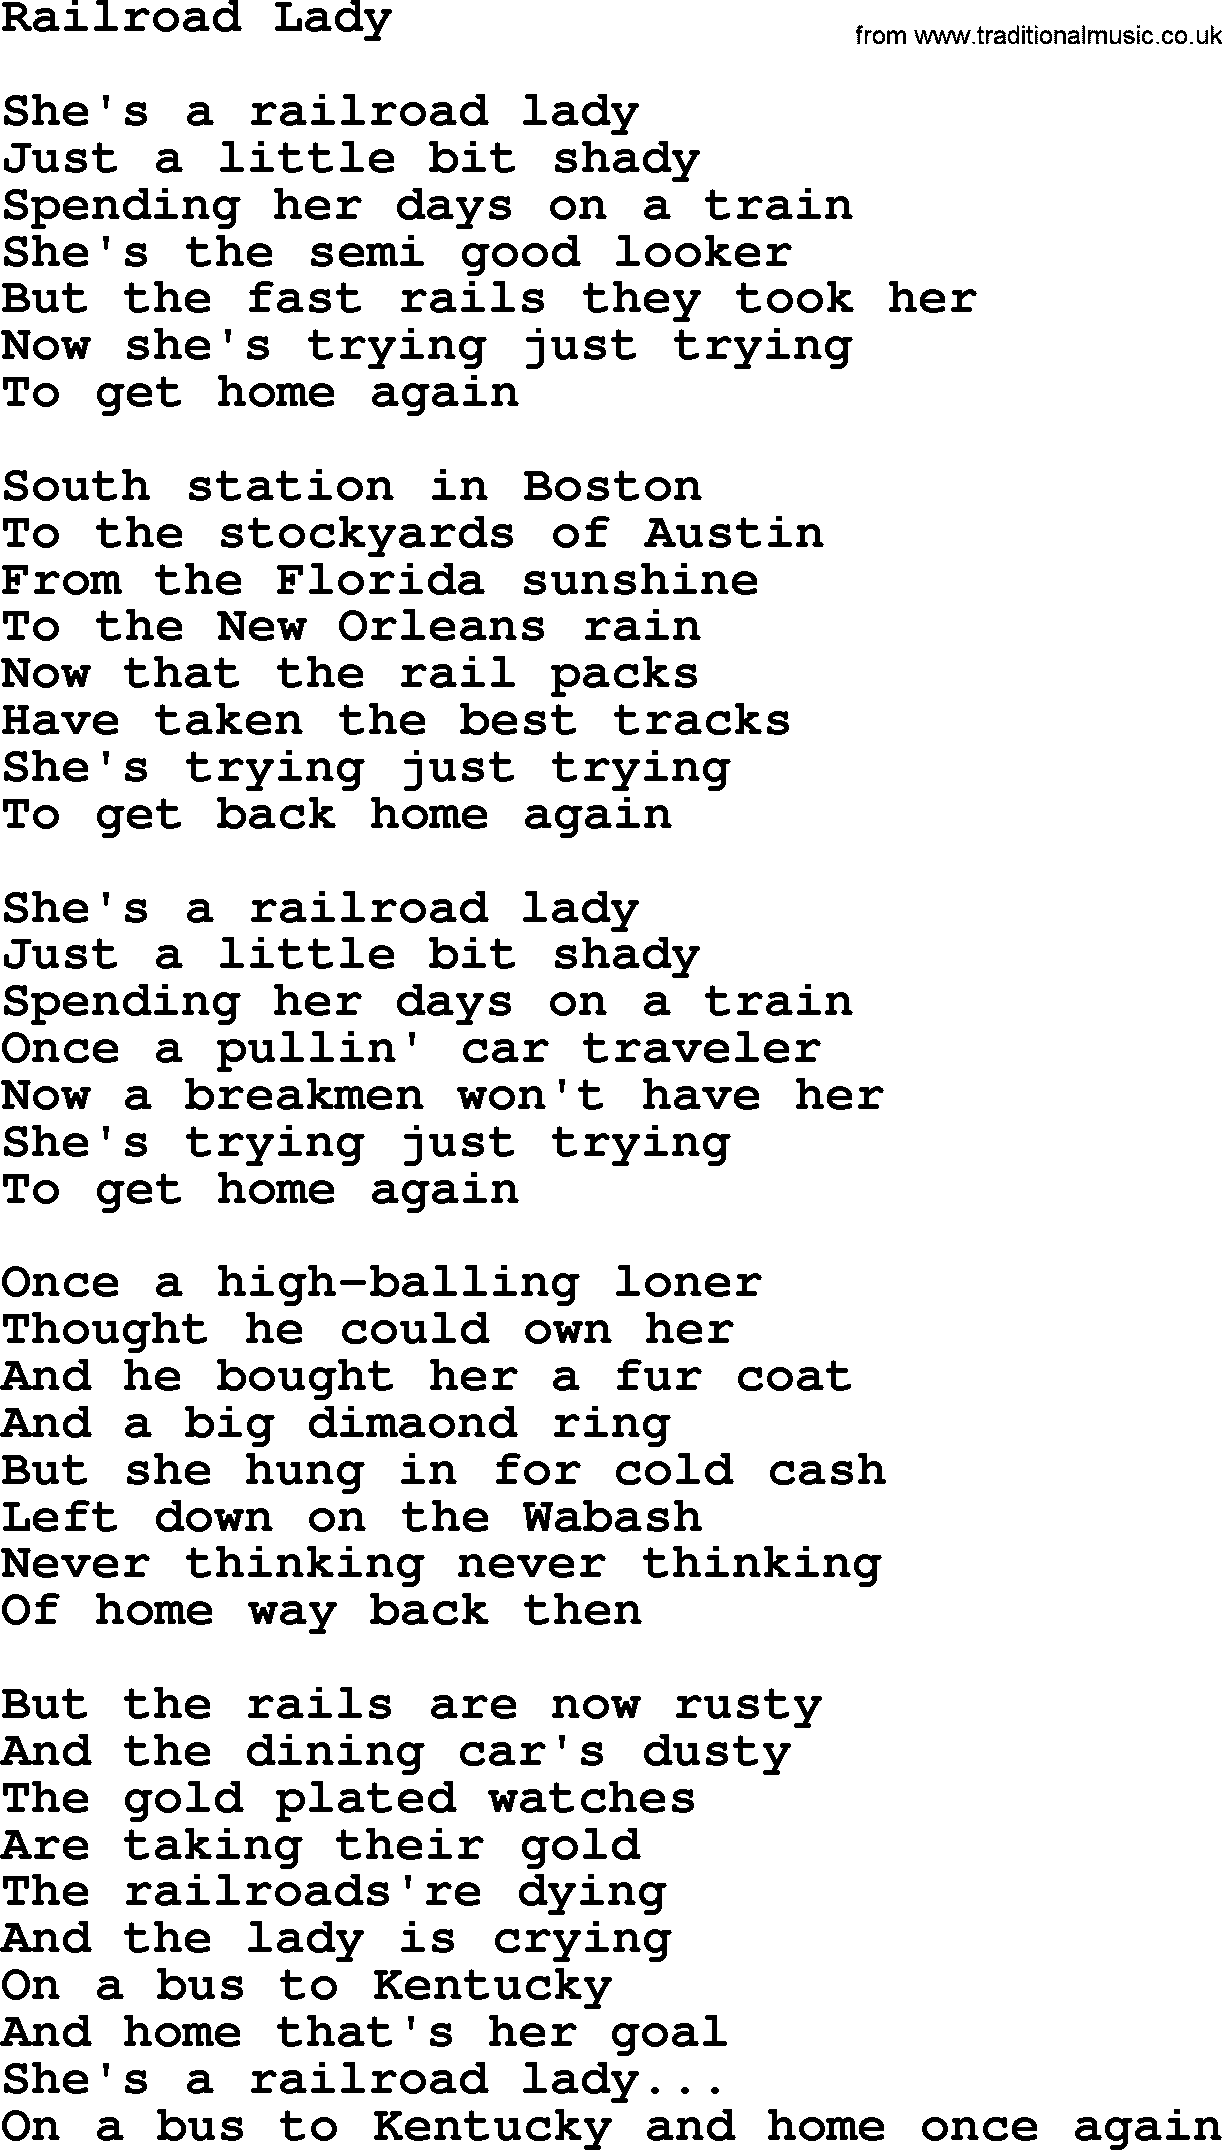 Willie Nelson song: Railroad Lady lyrics